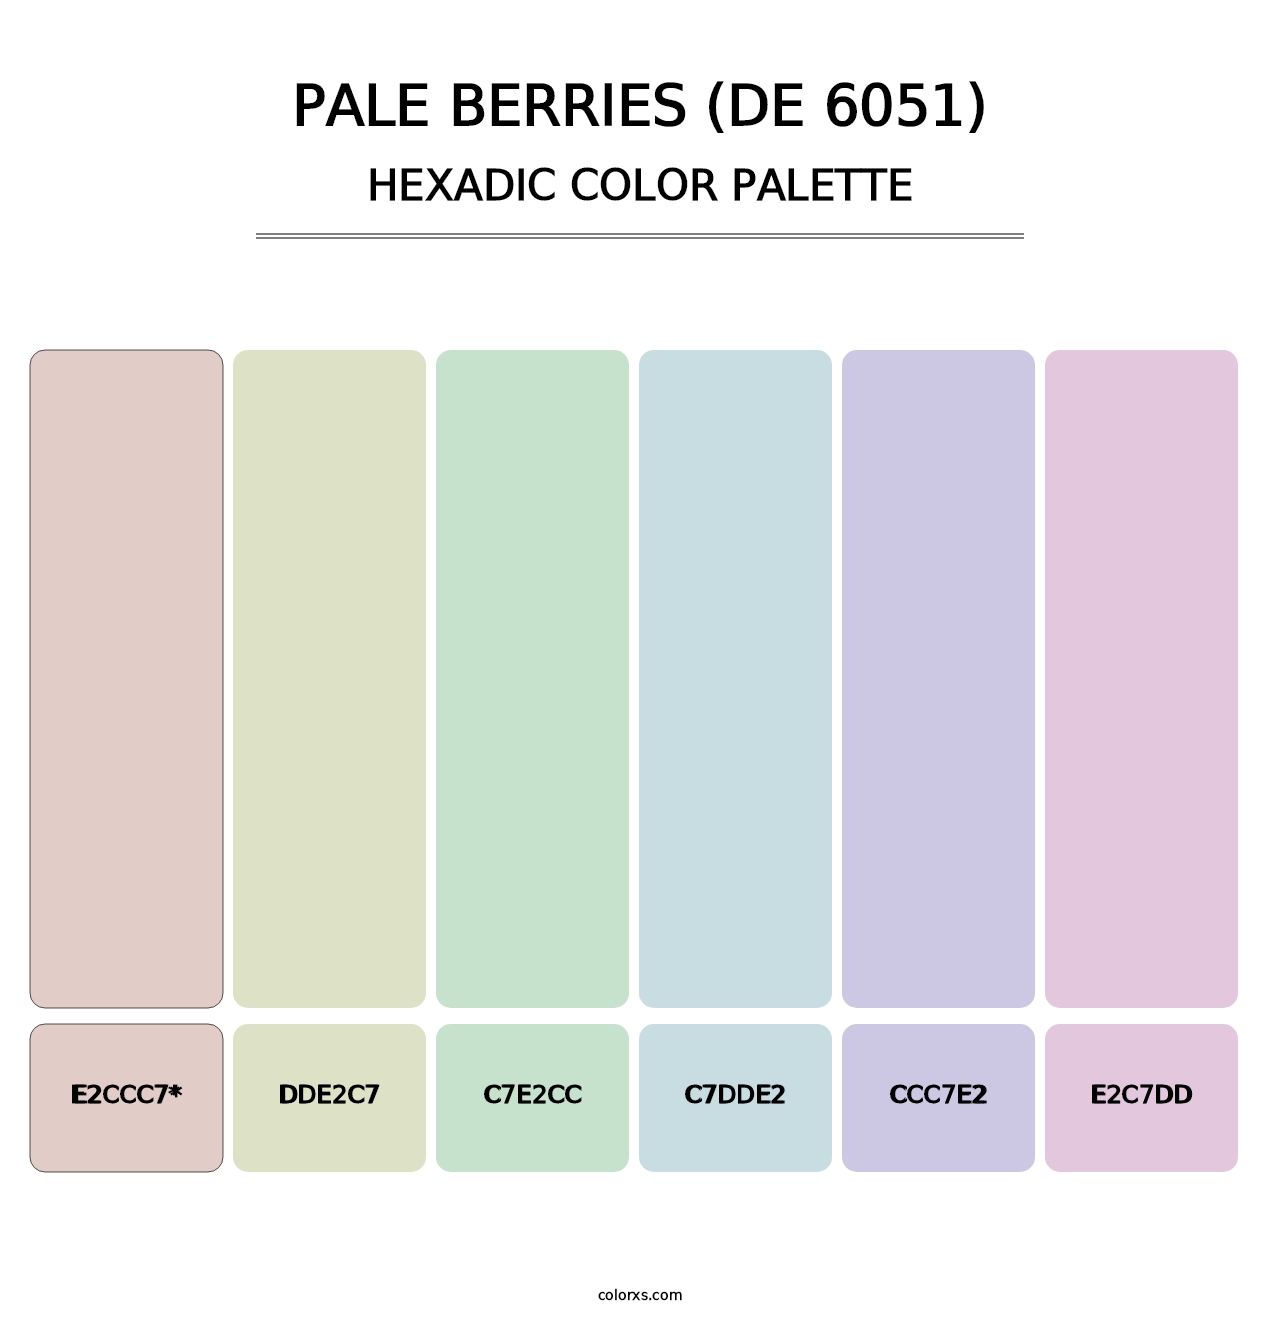 Pale Berries (DE 6051) - Hexadic Color Palette